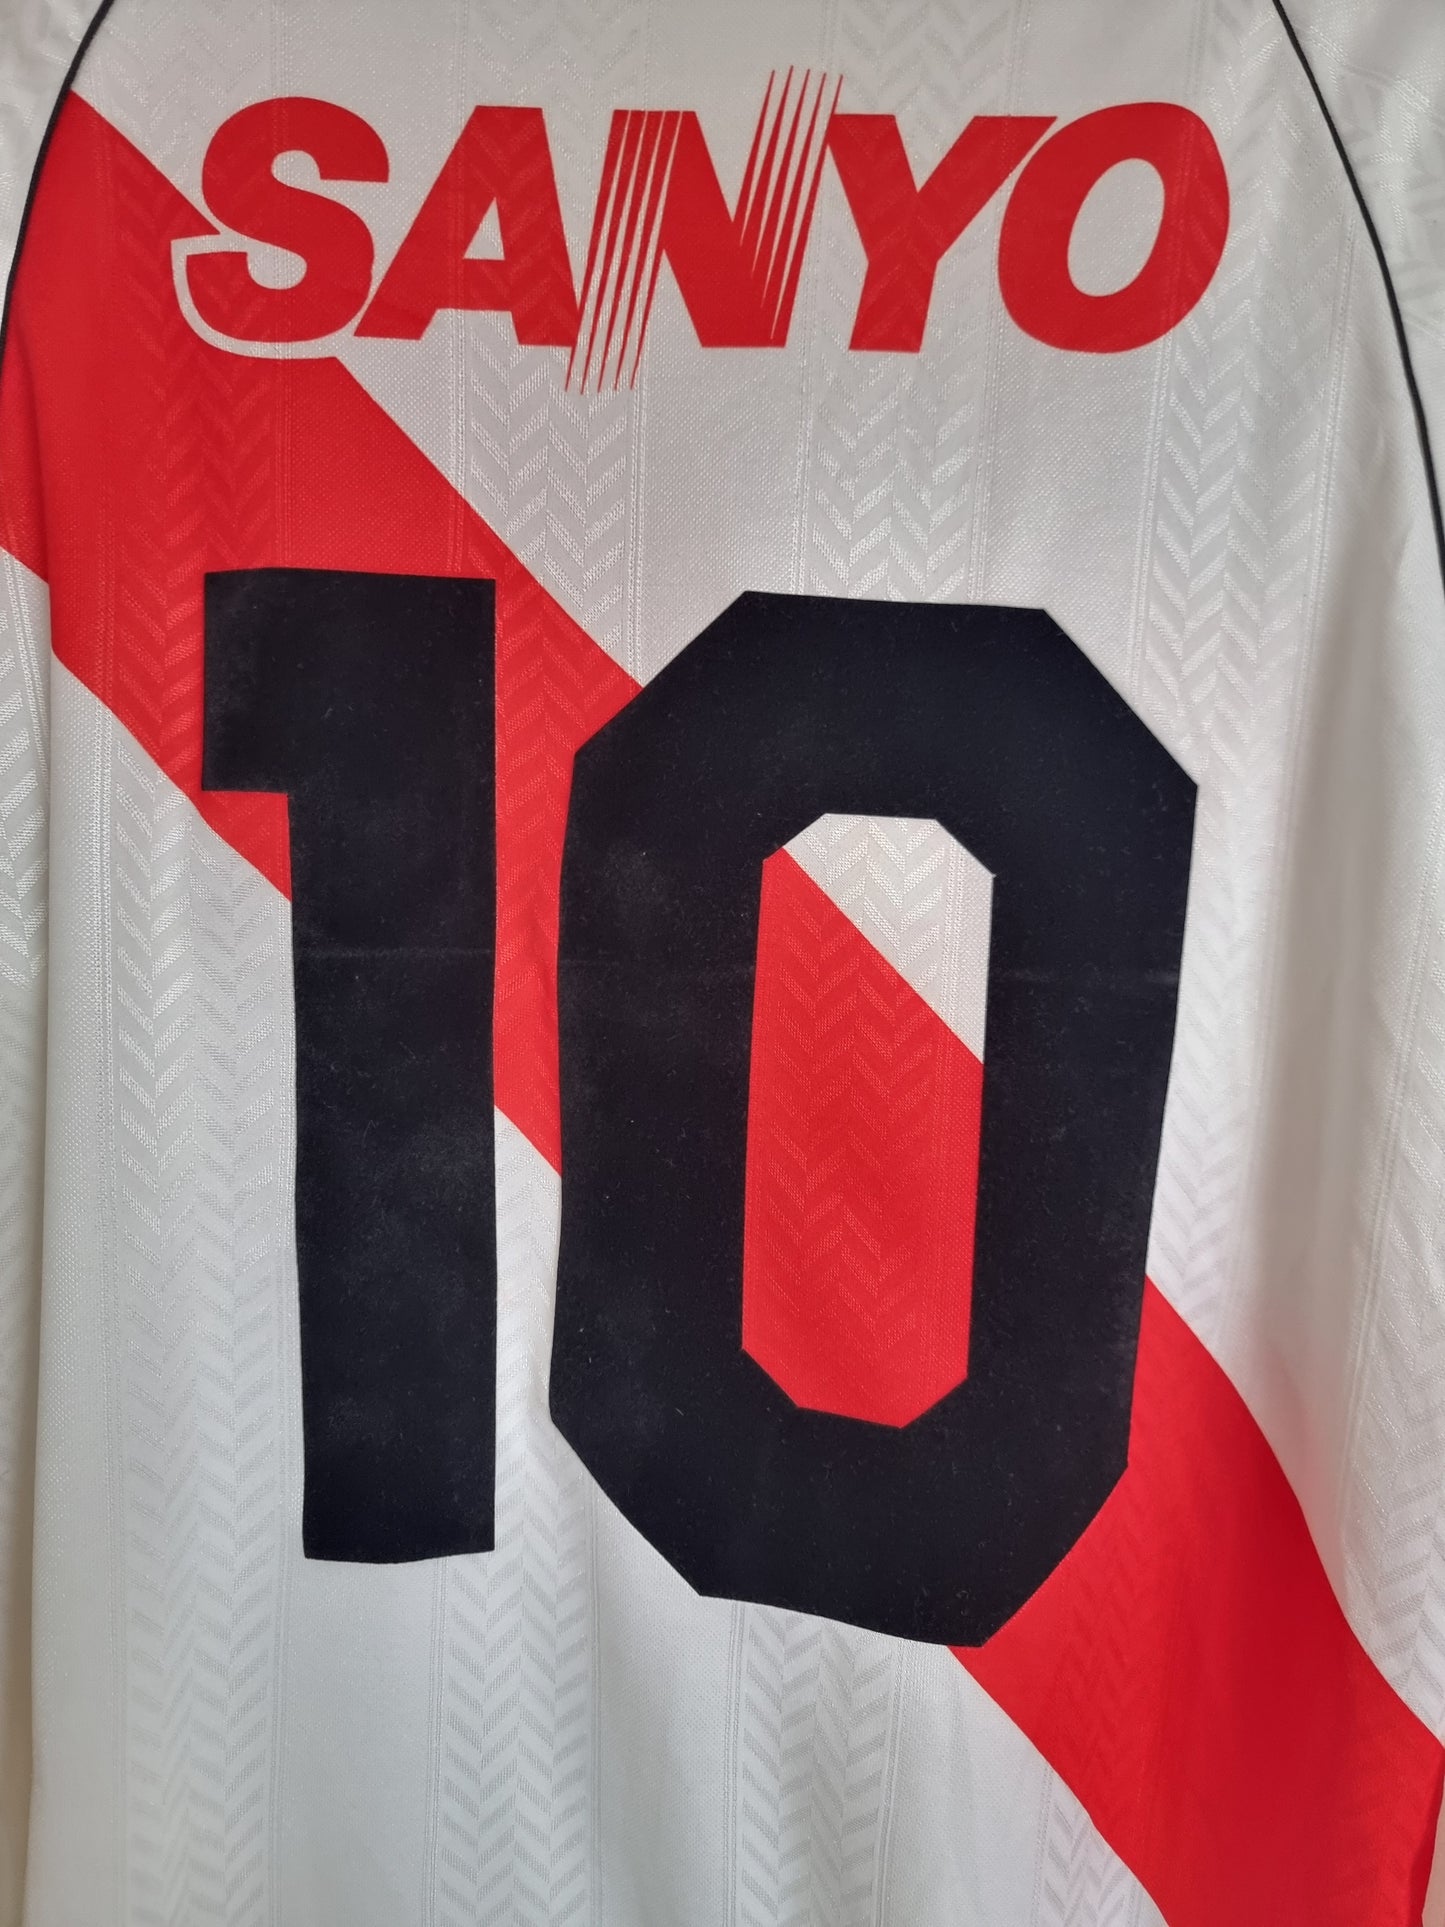 Adidas River Plate 92/94 '10 (Gallardo)' Long Sleeve Home Shirt Large